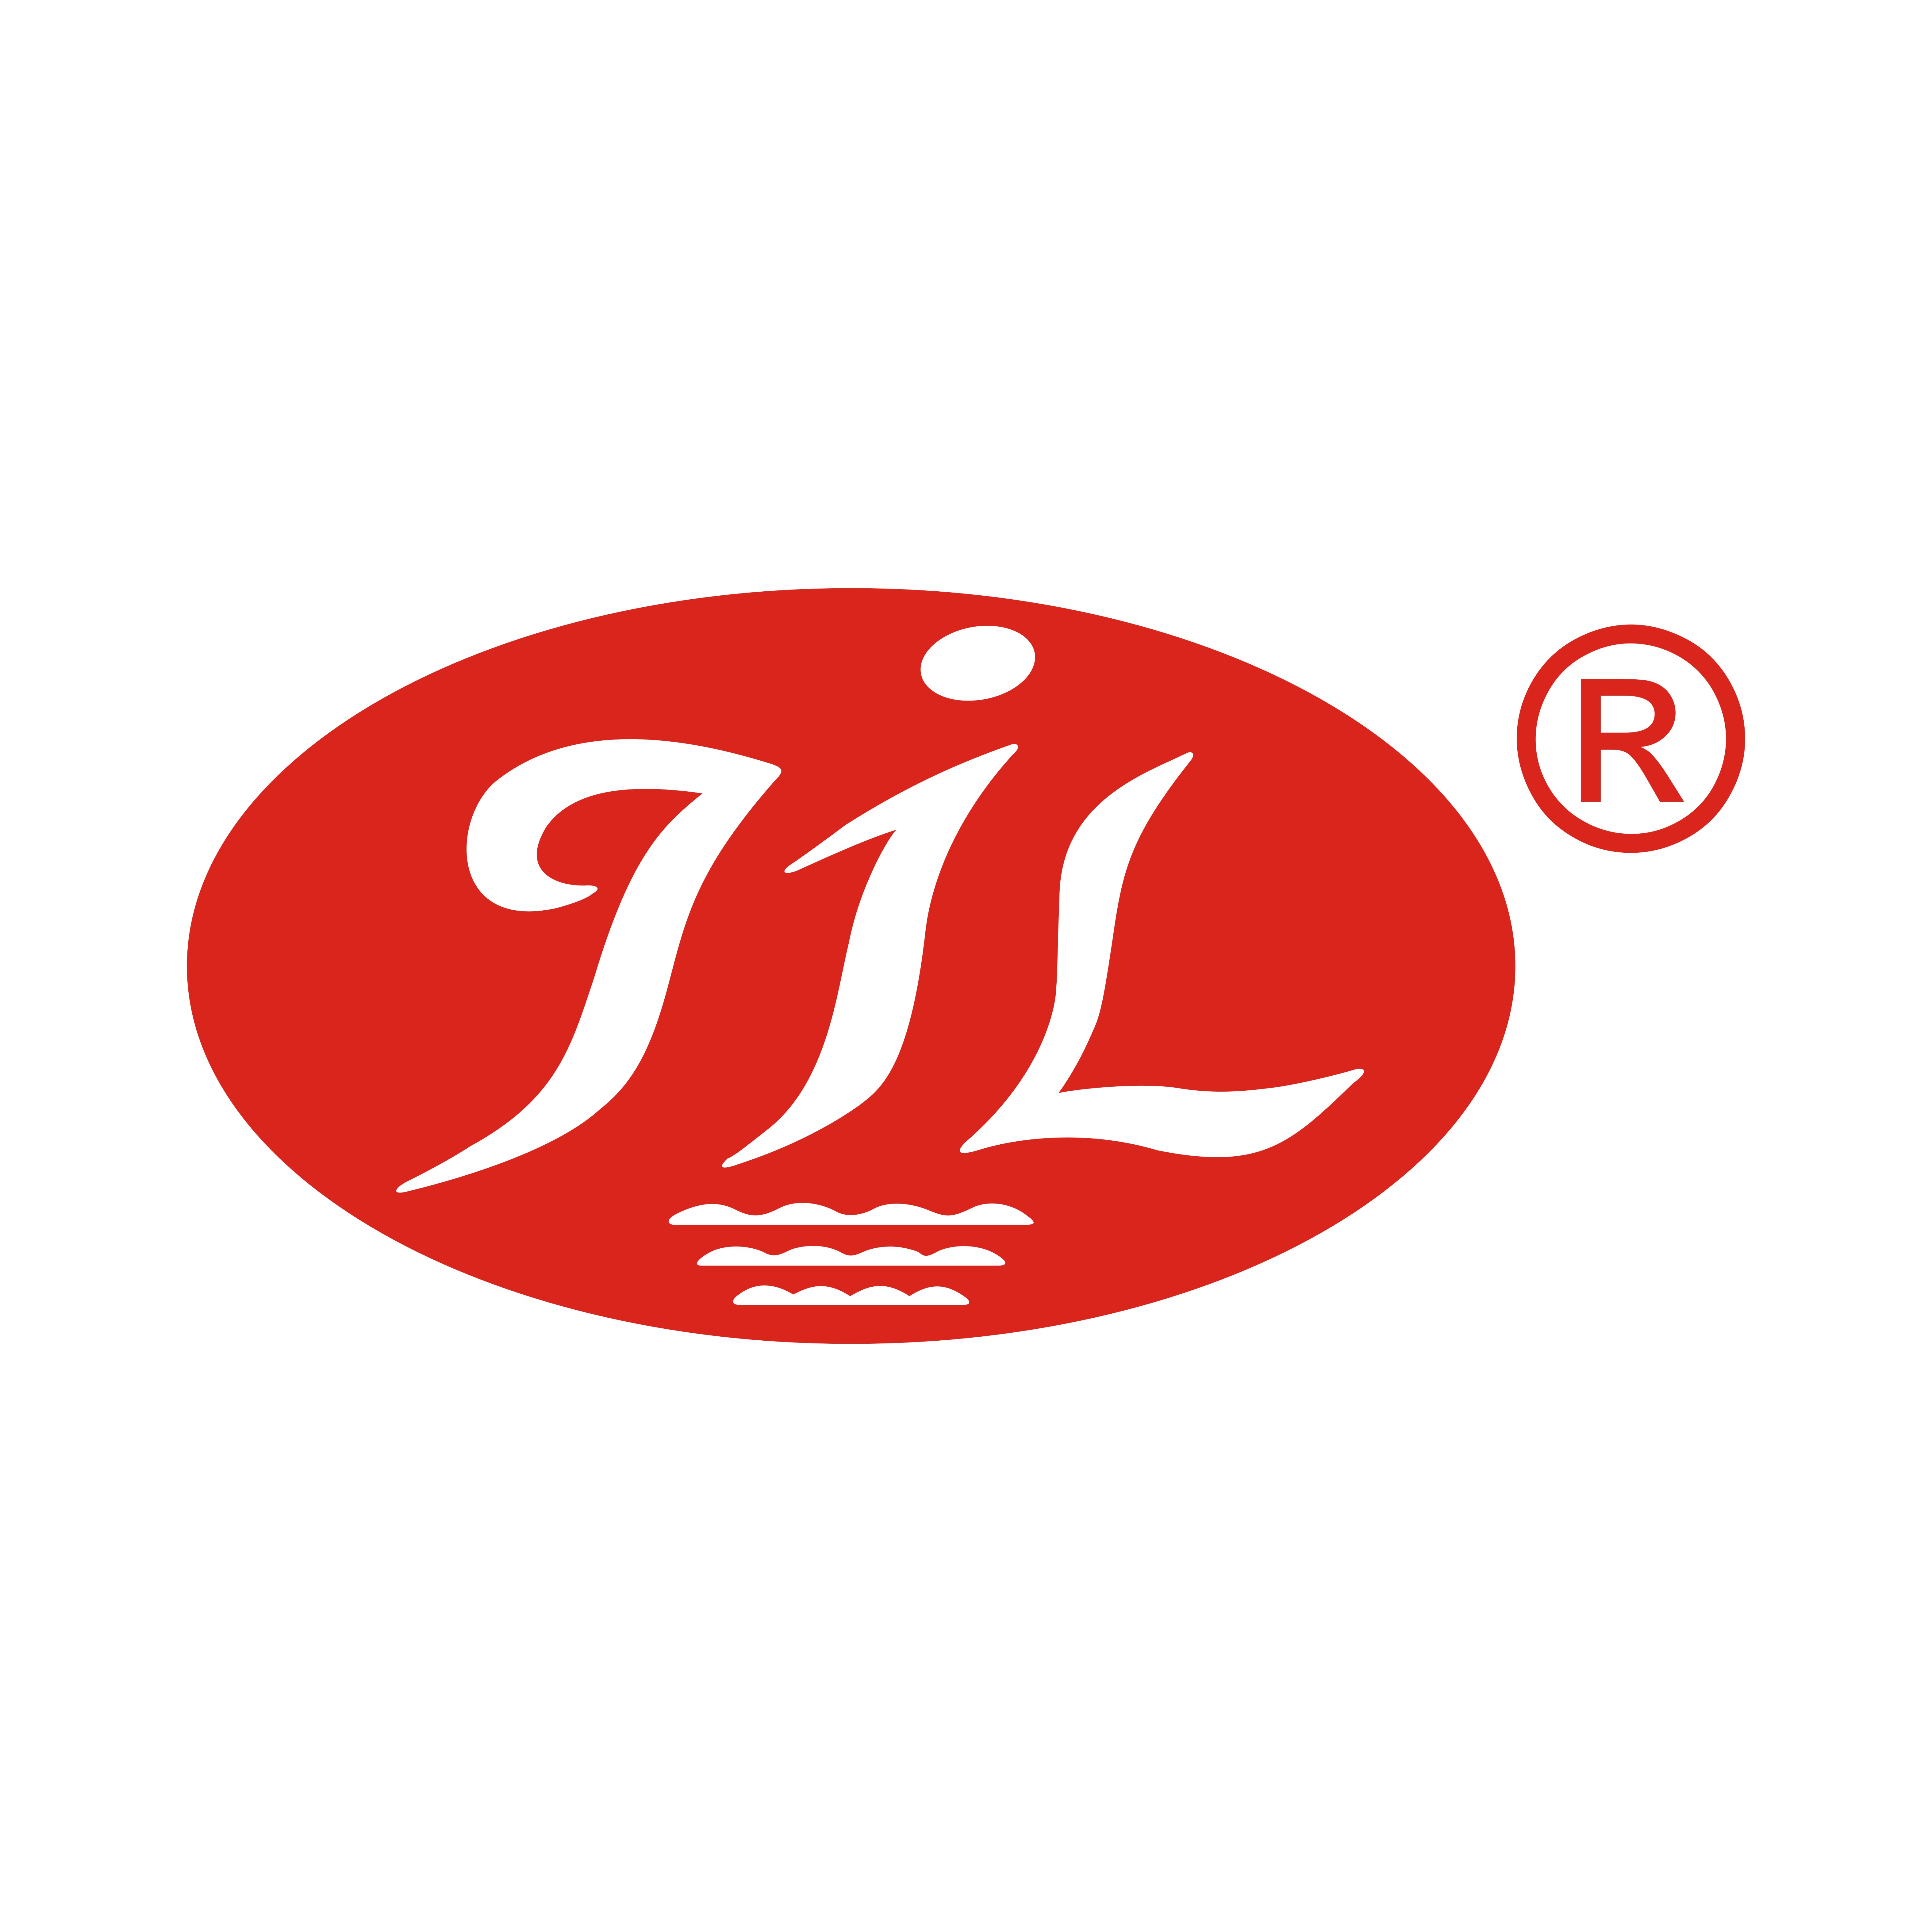 J.J.L Hardware Stationery Co., Ltd